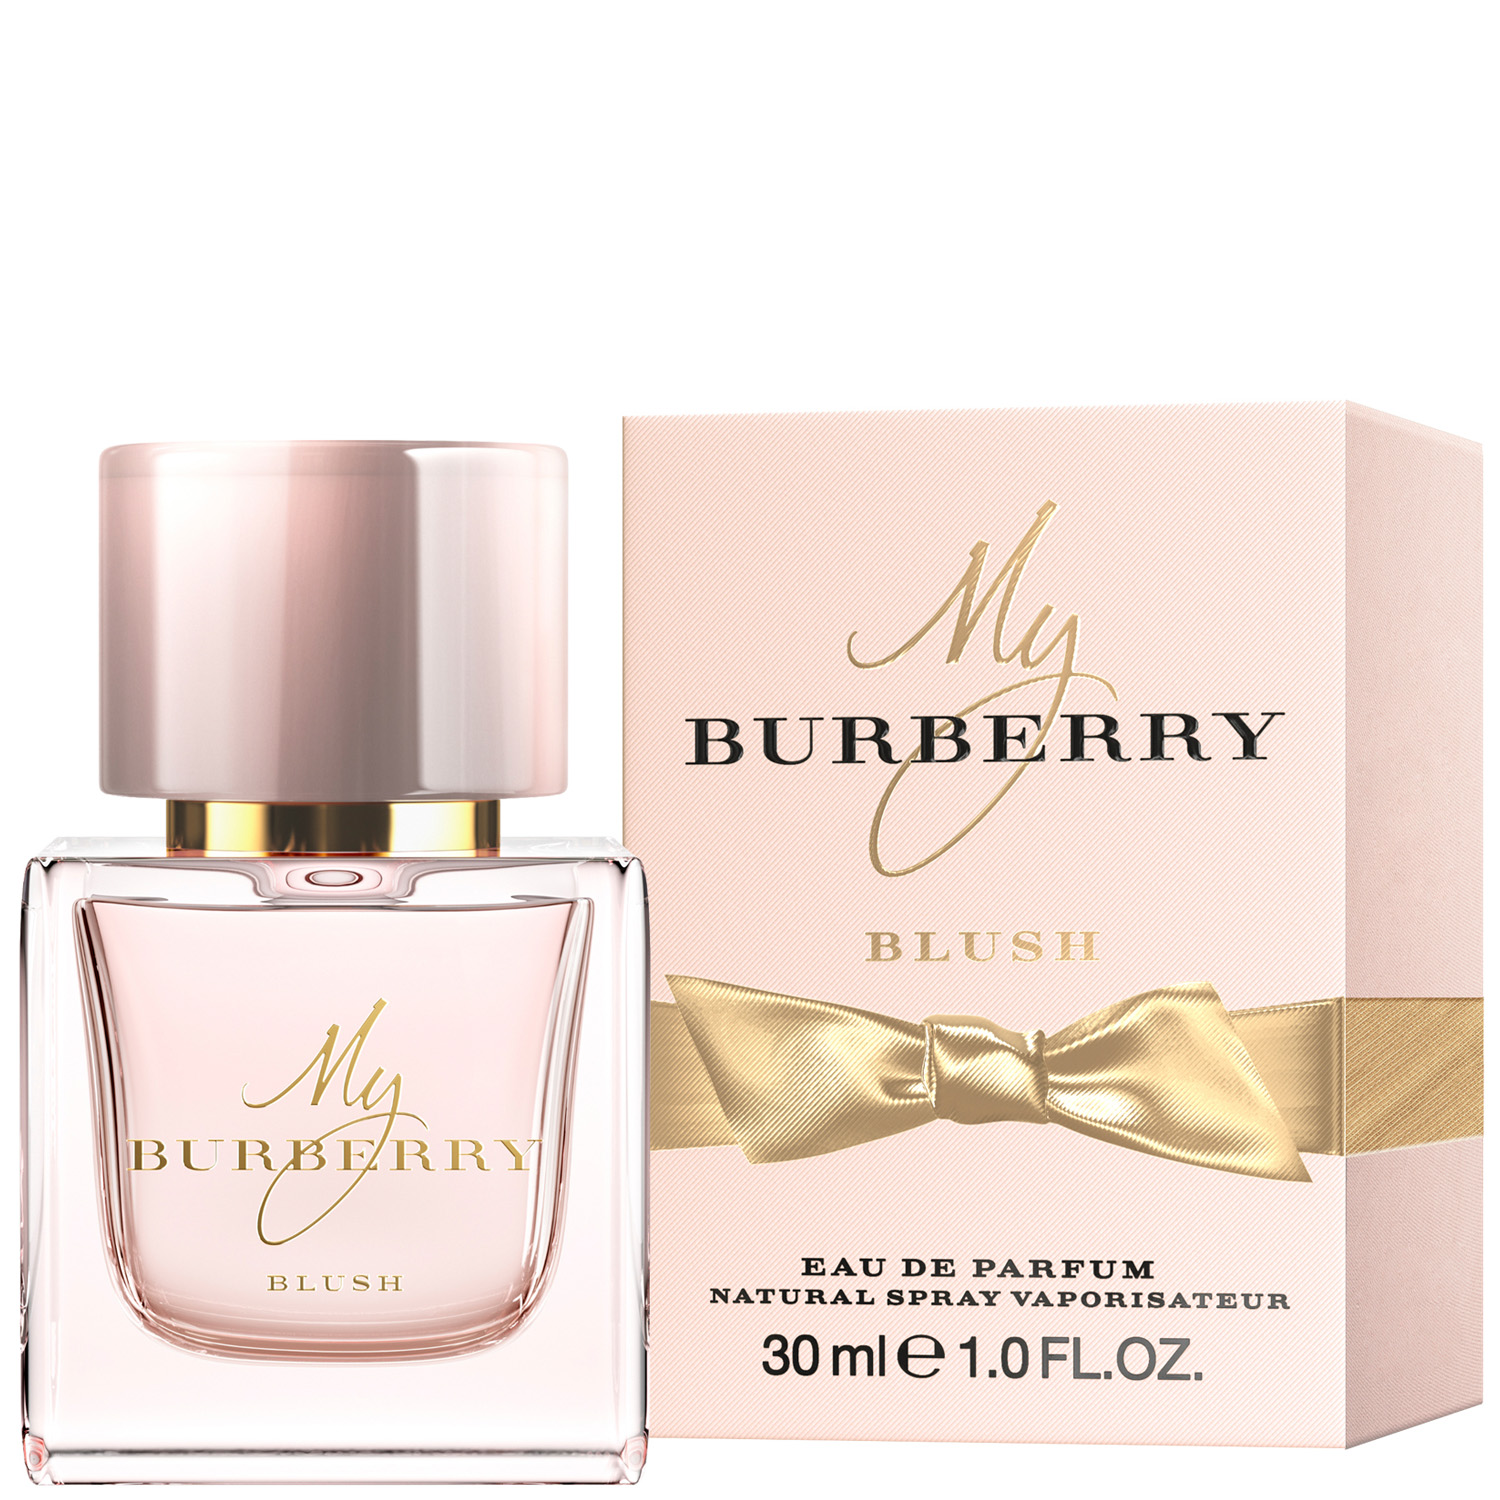 Burberry My Burberry Blush Eau de Parfum 30ml